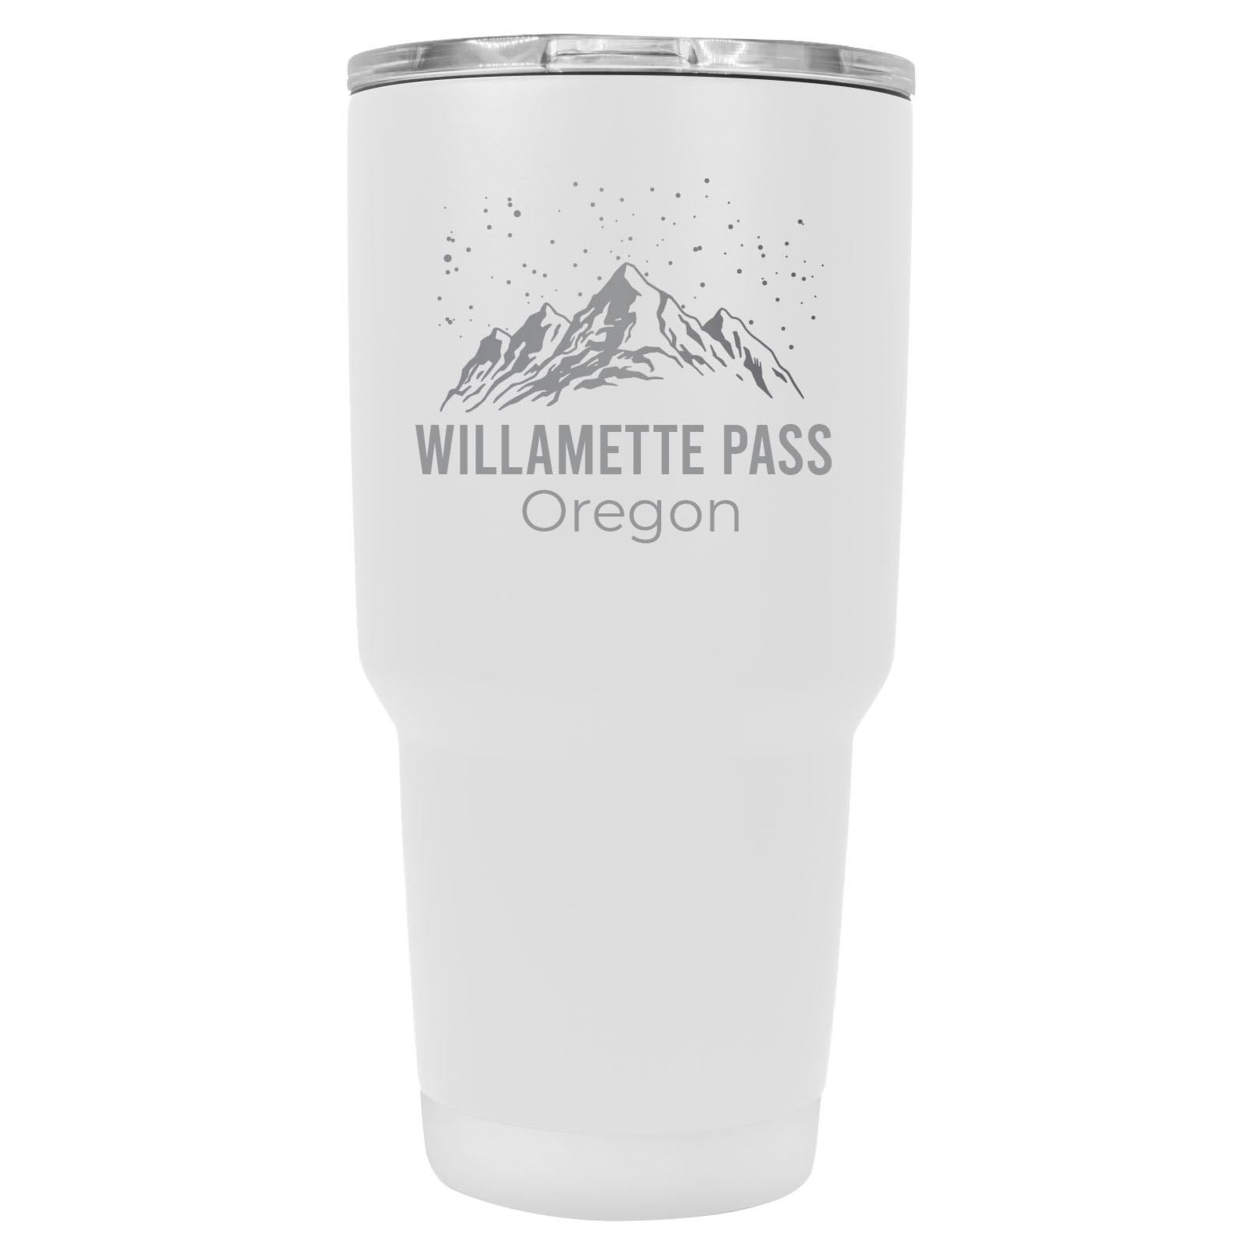 Willamette Pass Oregon Ski Snowboard Winter Souvenir Laser Engraved 24 Oz Insulated Stainless Steel Tumbler - Red